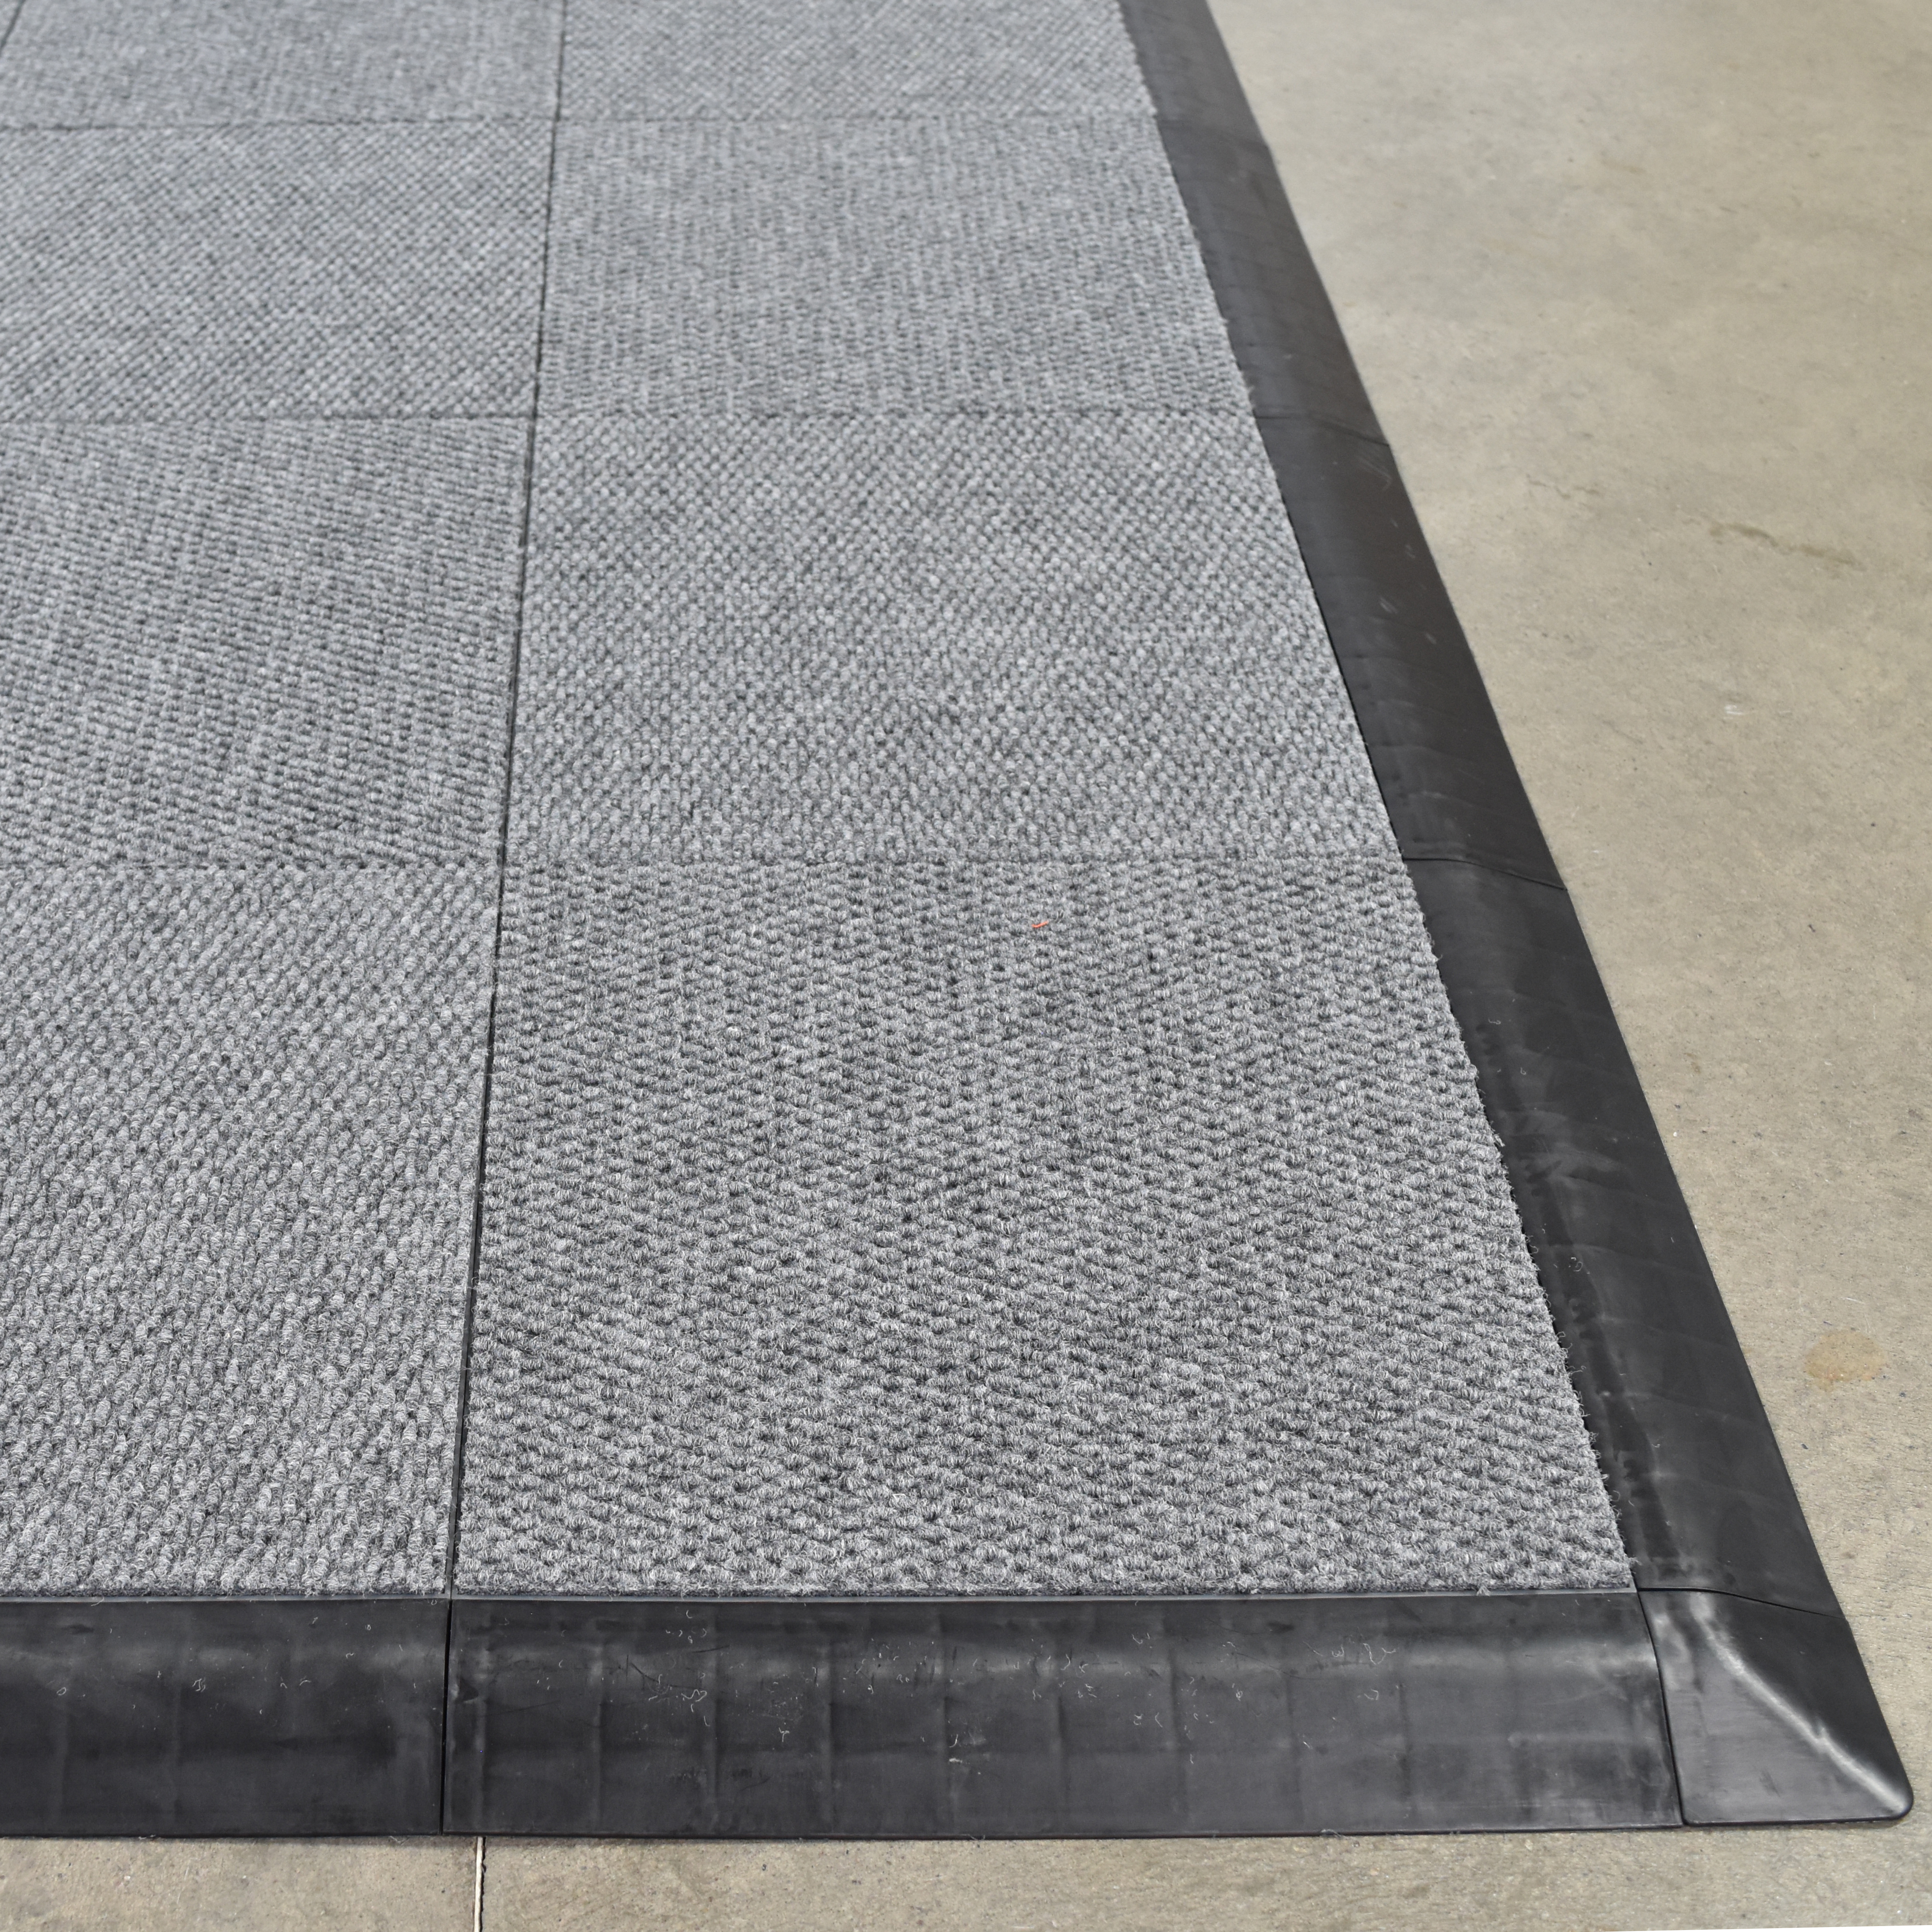 Raised interlocking carpet tiles to use on in floor radiant heat